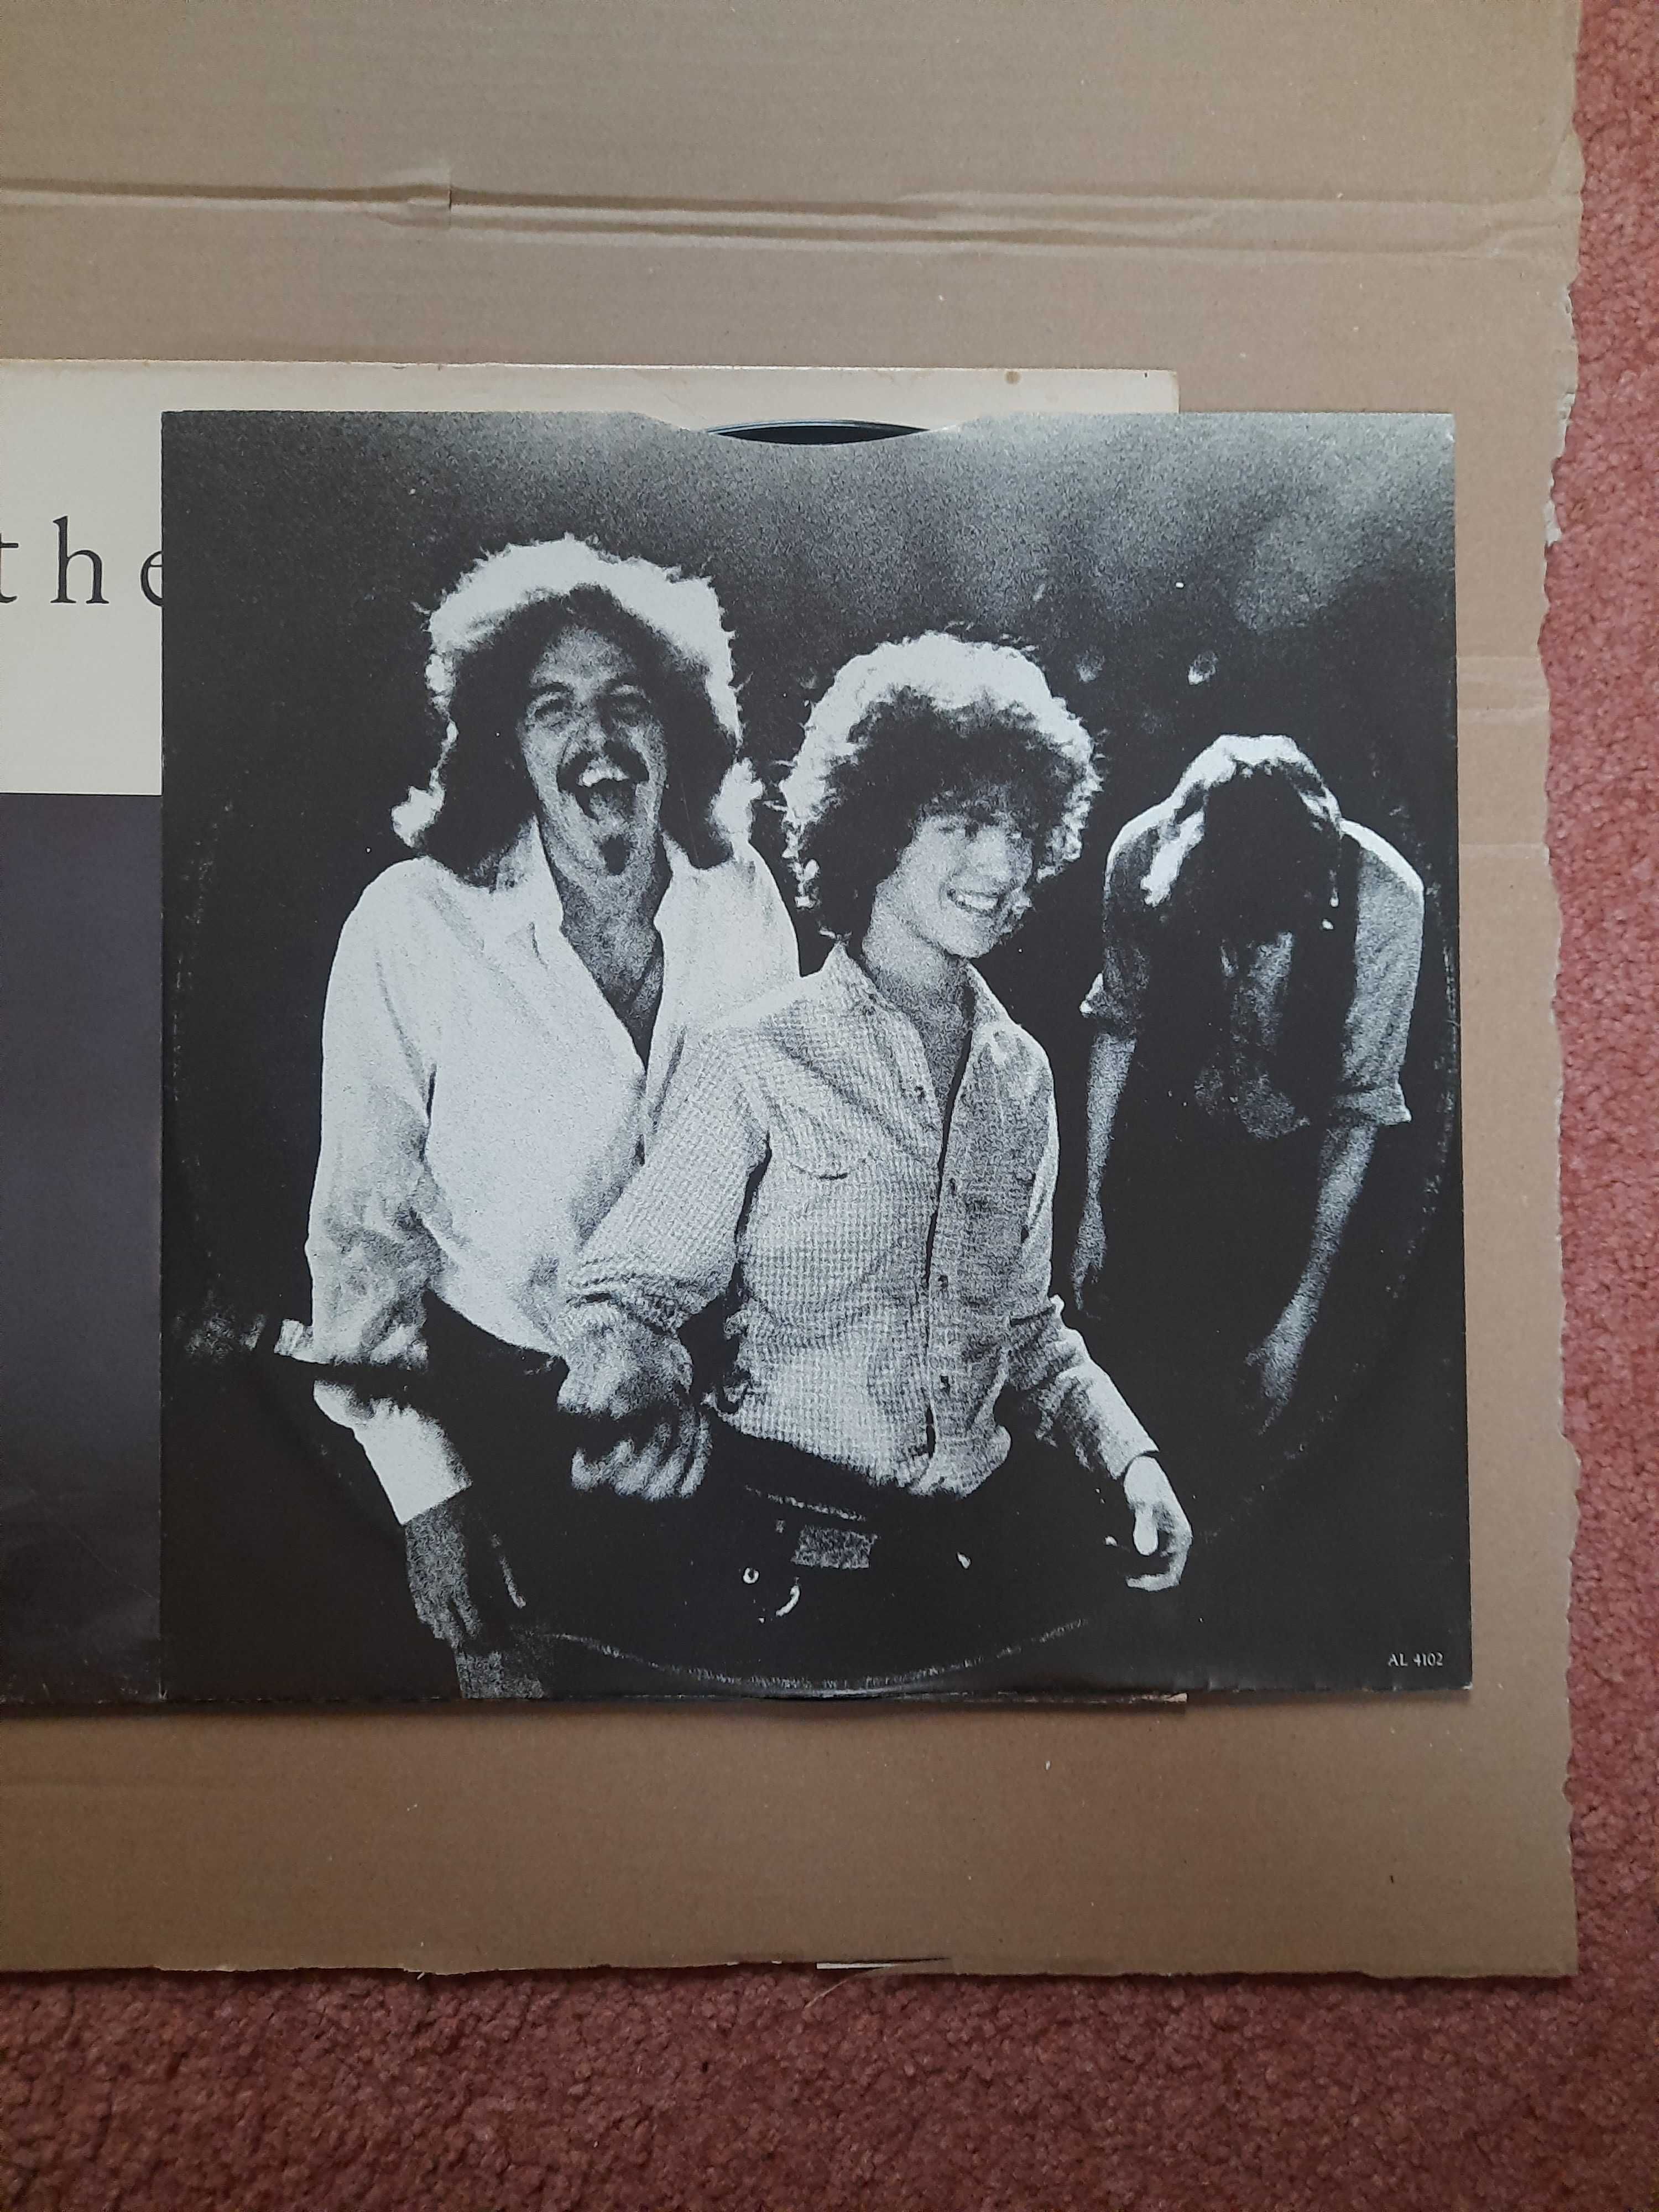 Płyta winylowa - the alpha band - the alpha band, 1976 r.